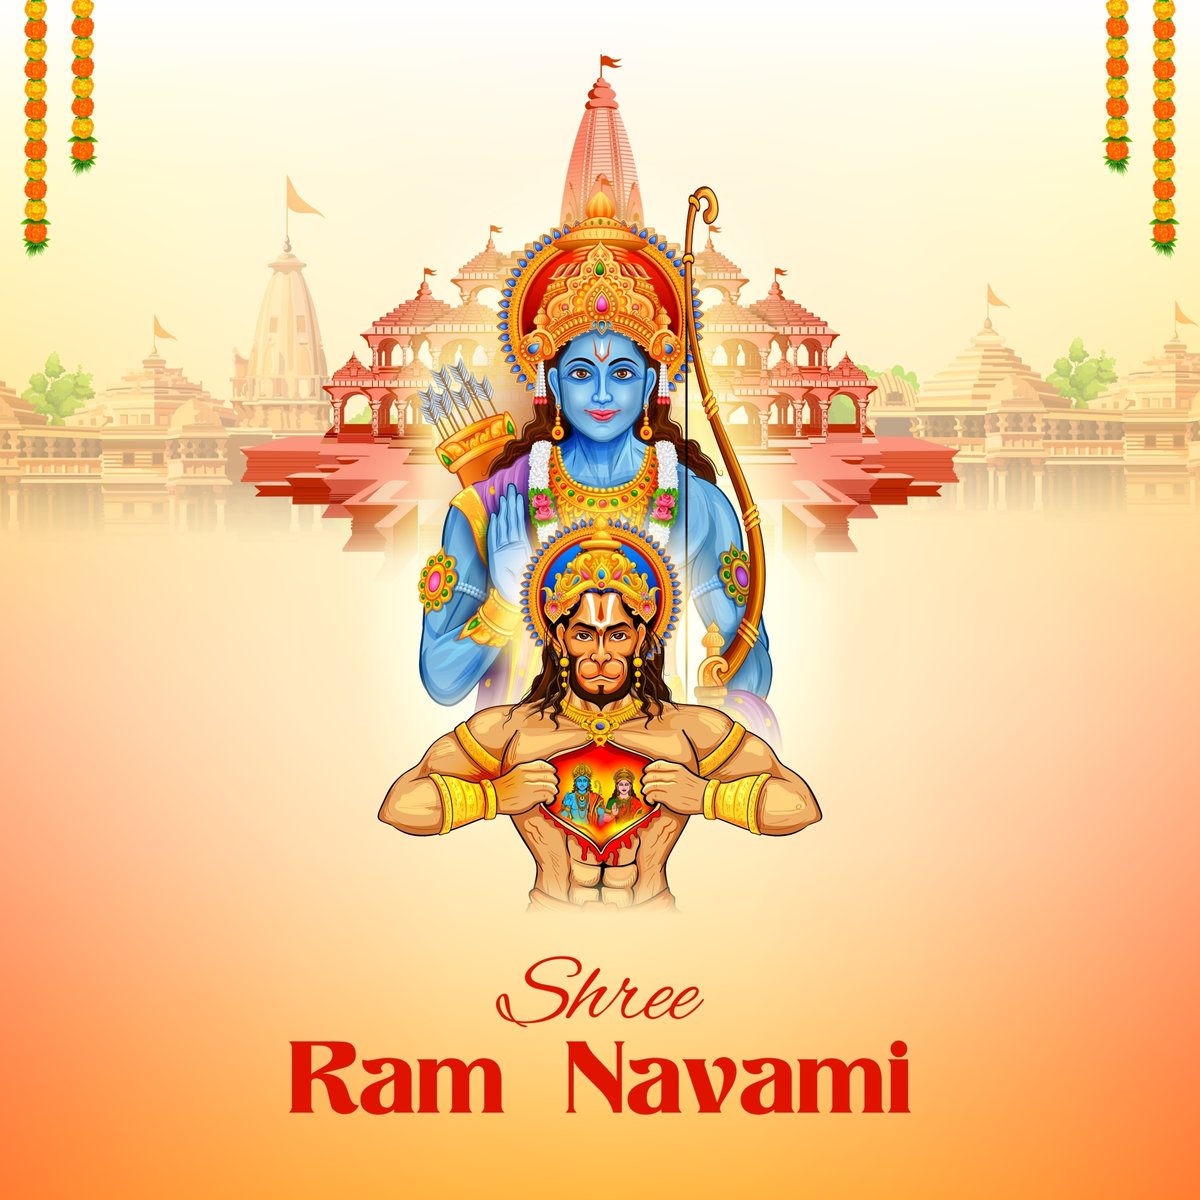 Happy Ram Navami to you all. 🙏❤️